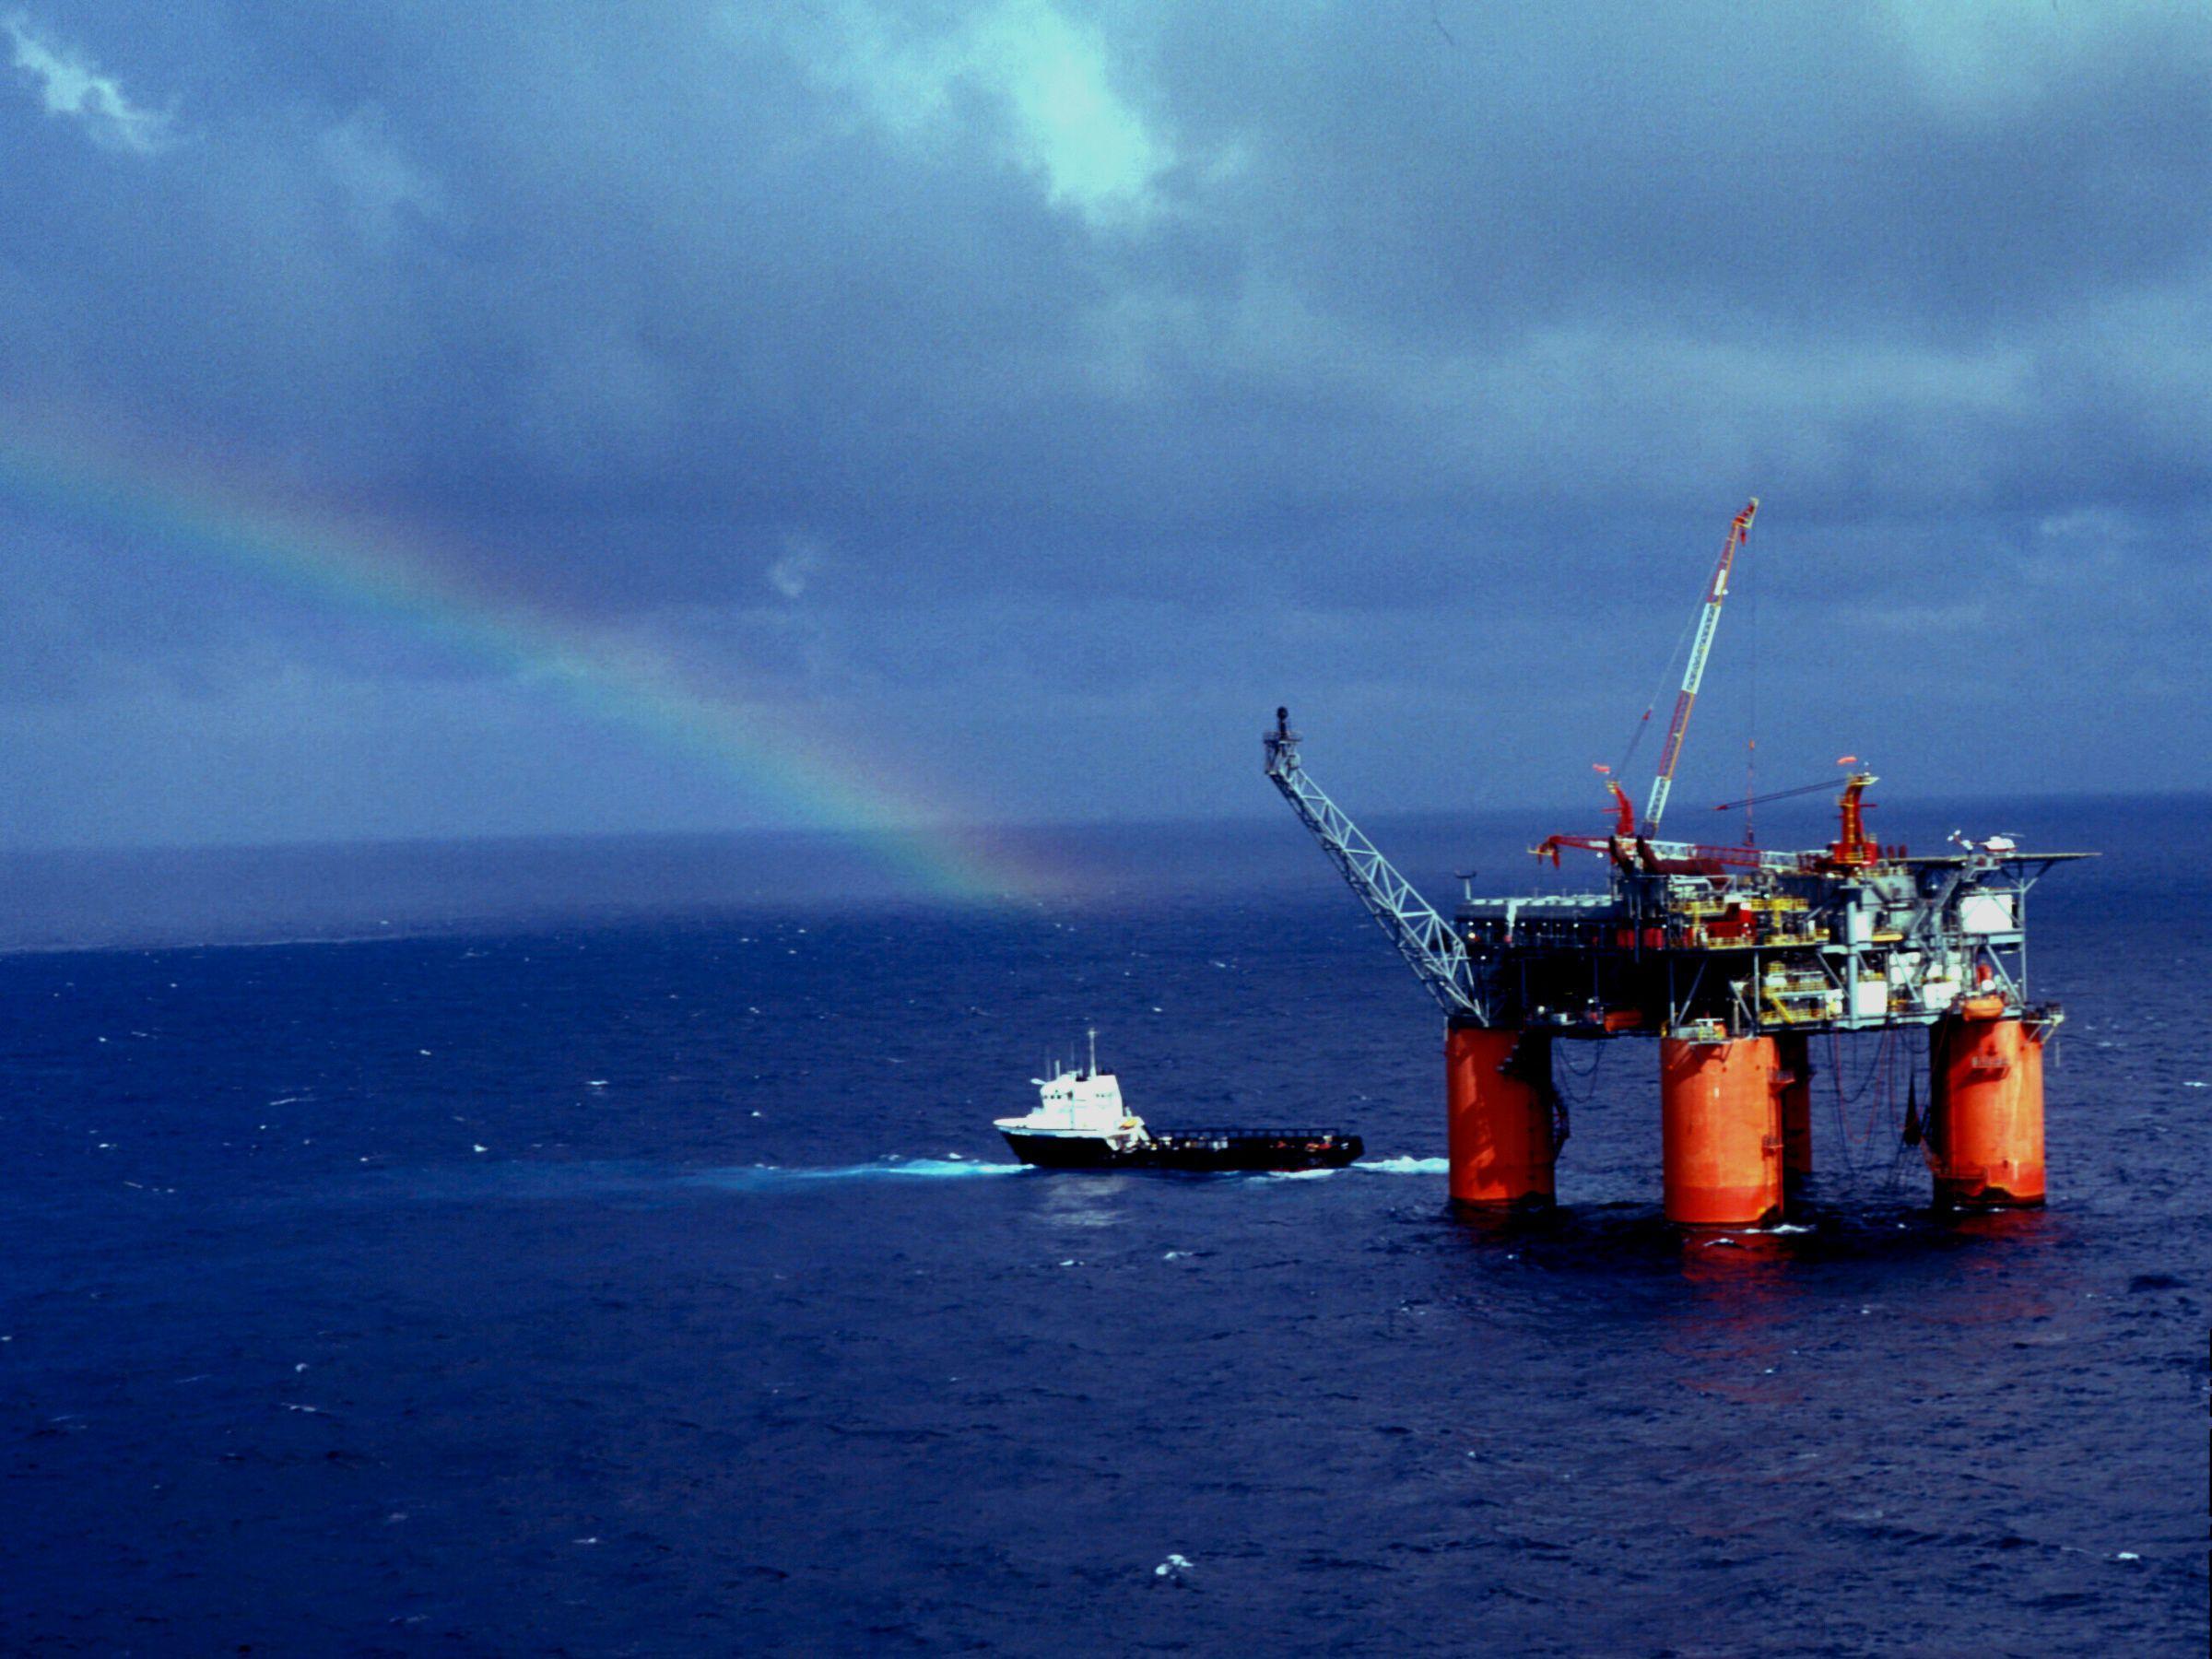 Atlantic Offshore Drilling, We Hardly Knew Ya